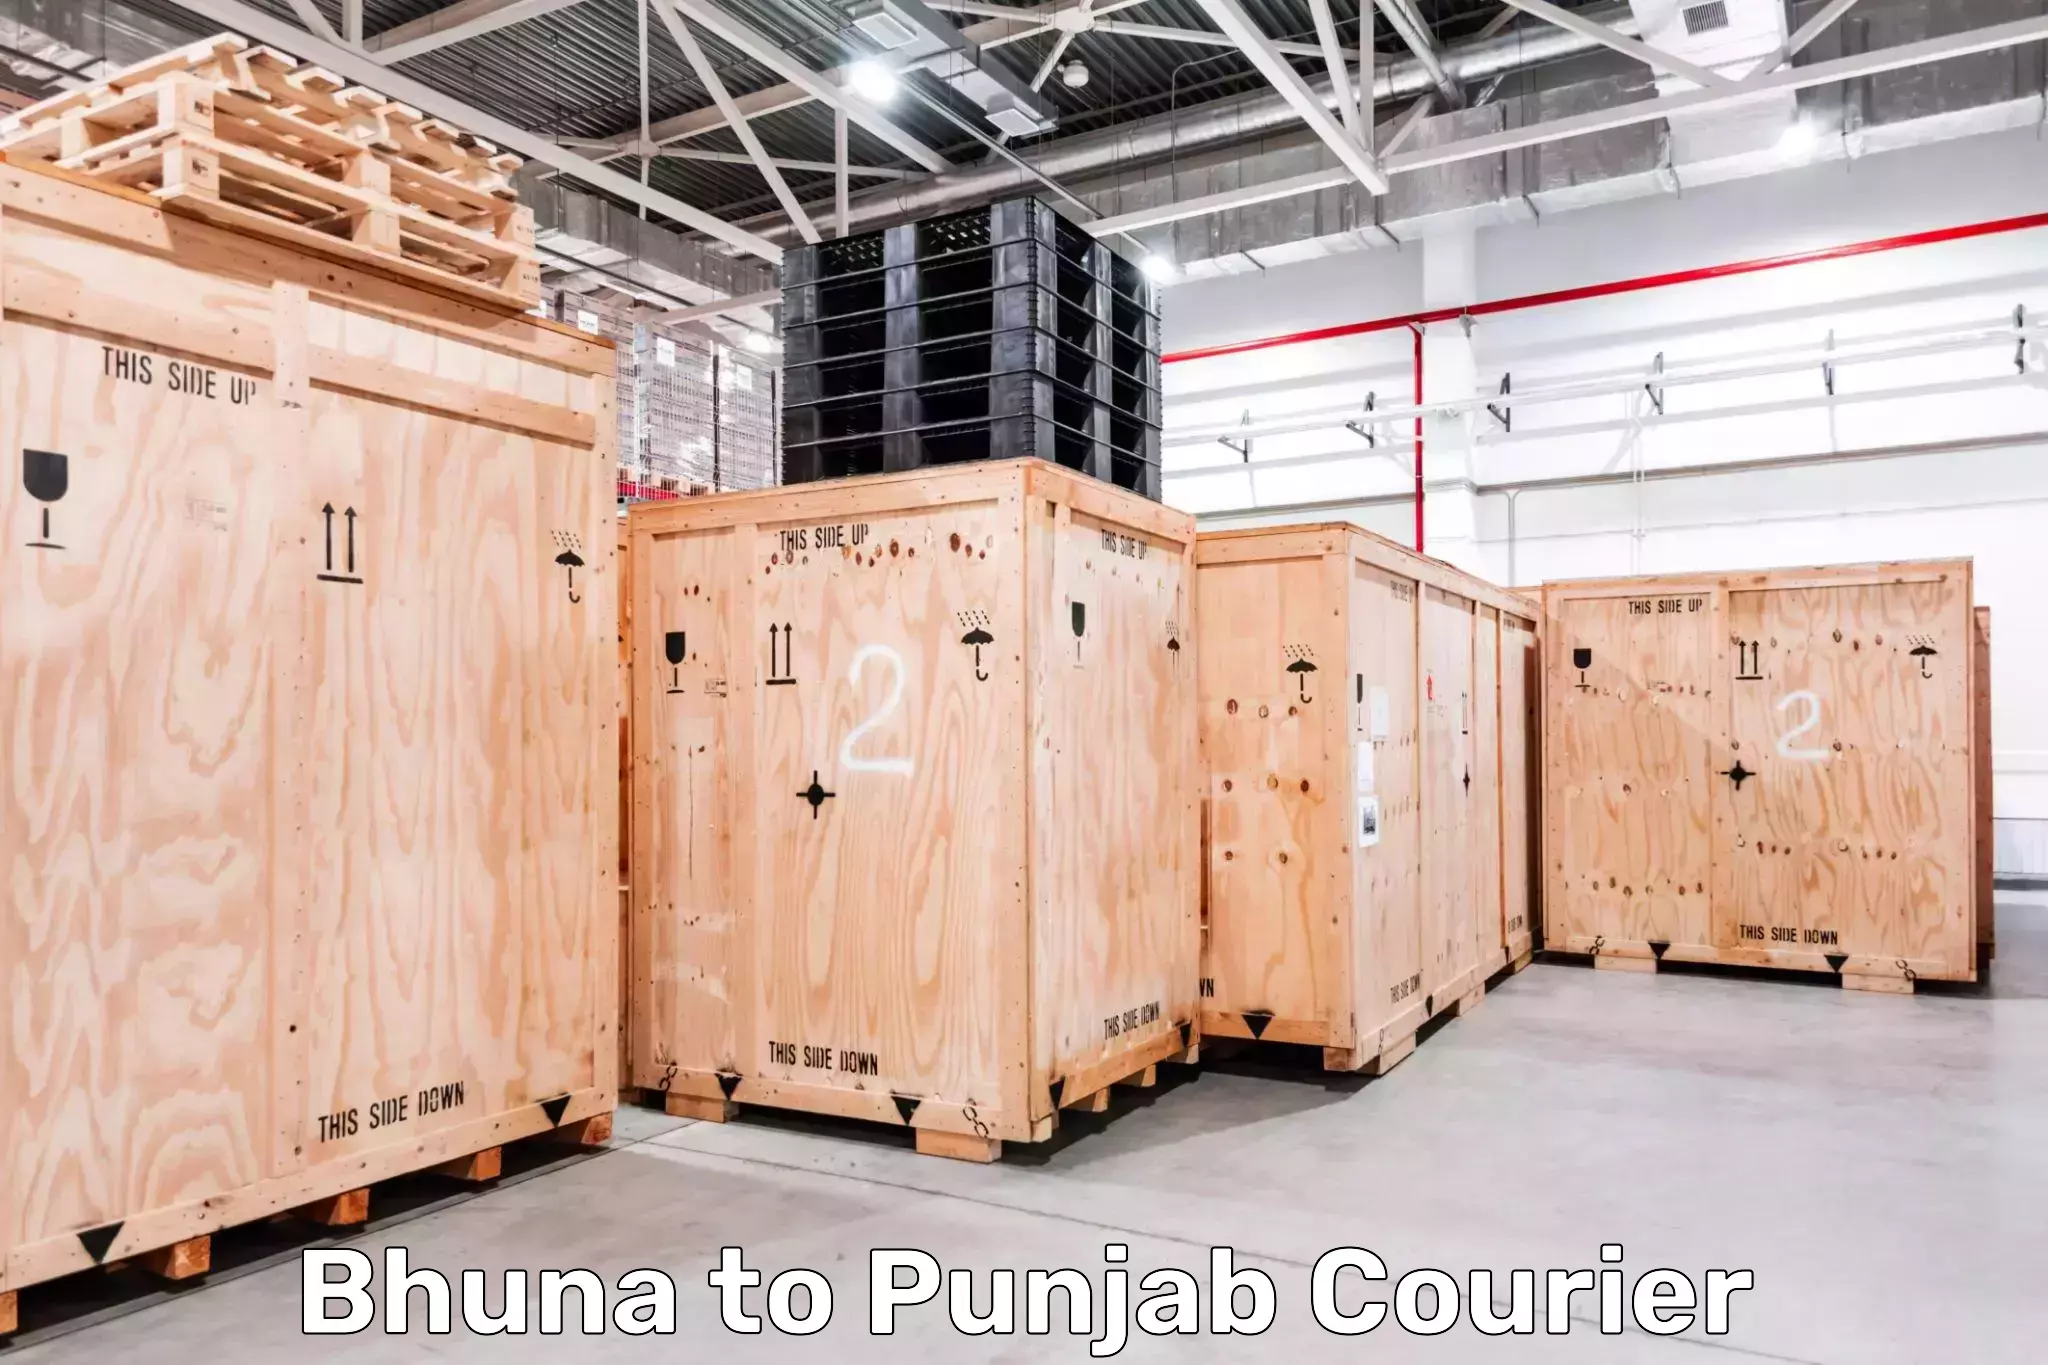 Courier service partnerships Bhuna to Dinanagar